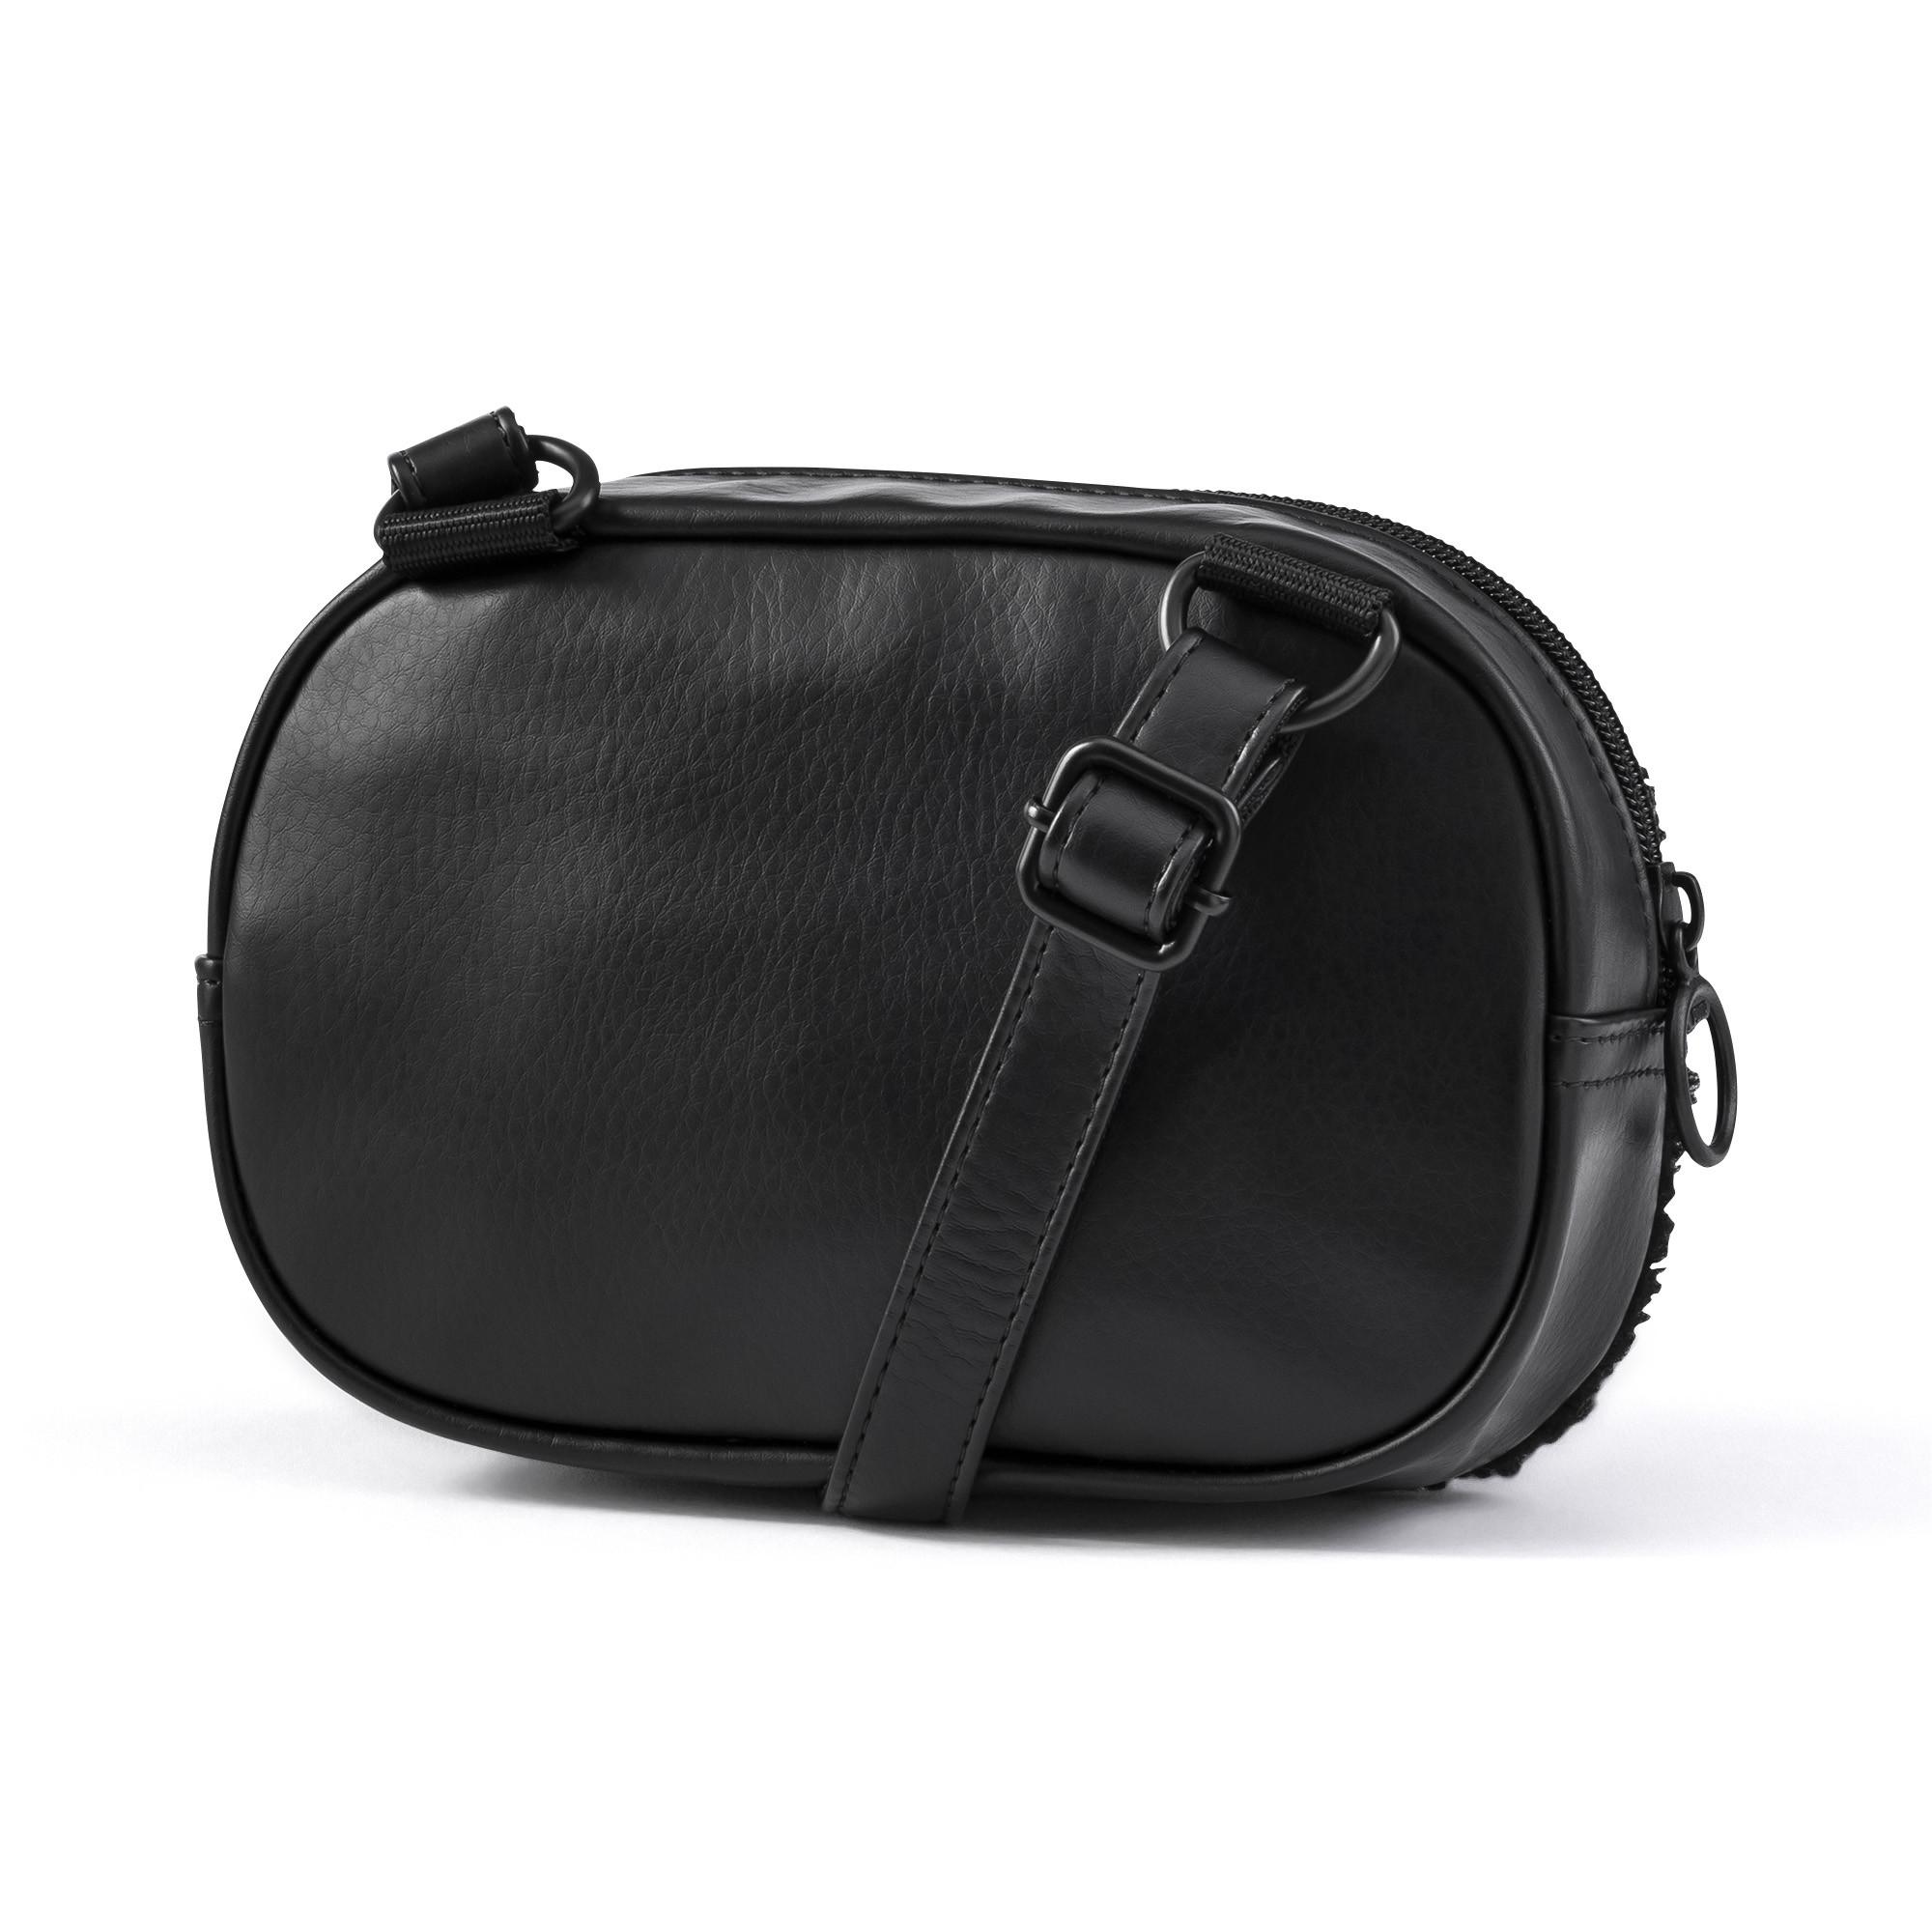 PUMA Prime Time Crossbody Bag in 01 (Black) - Lyst